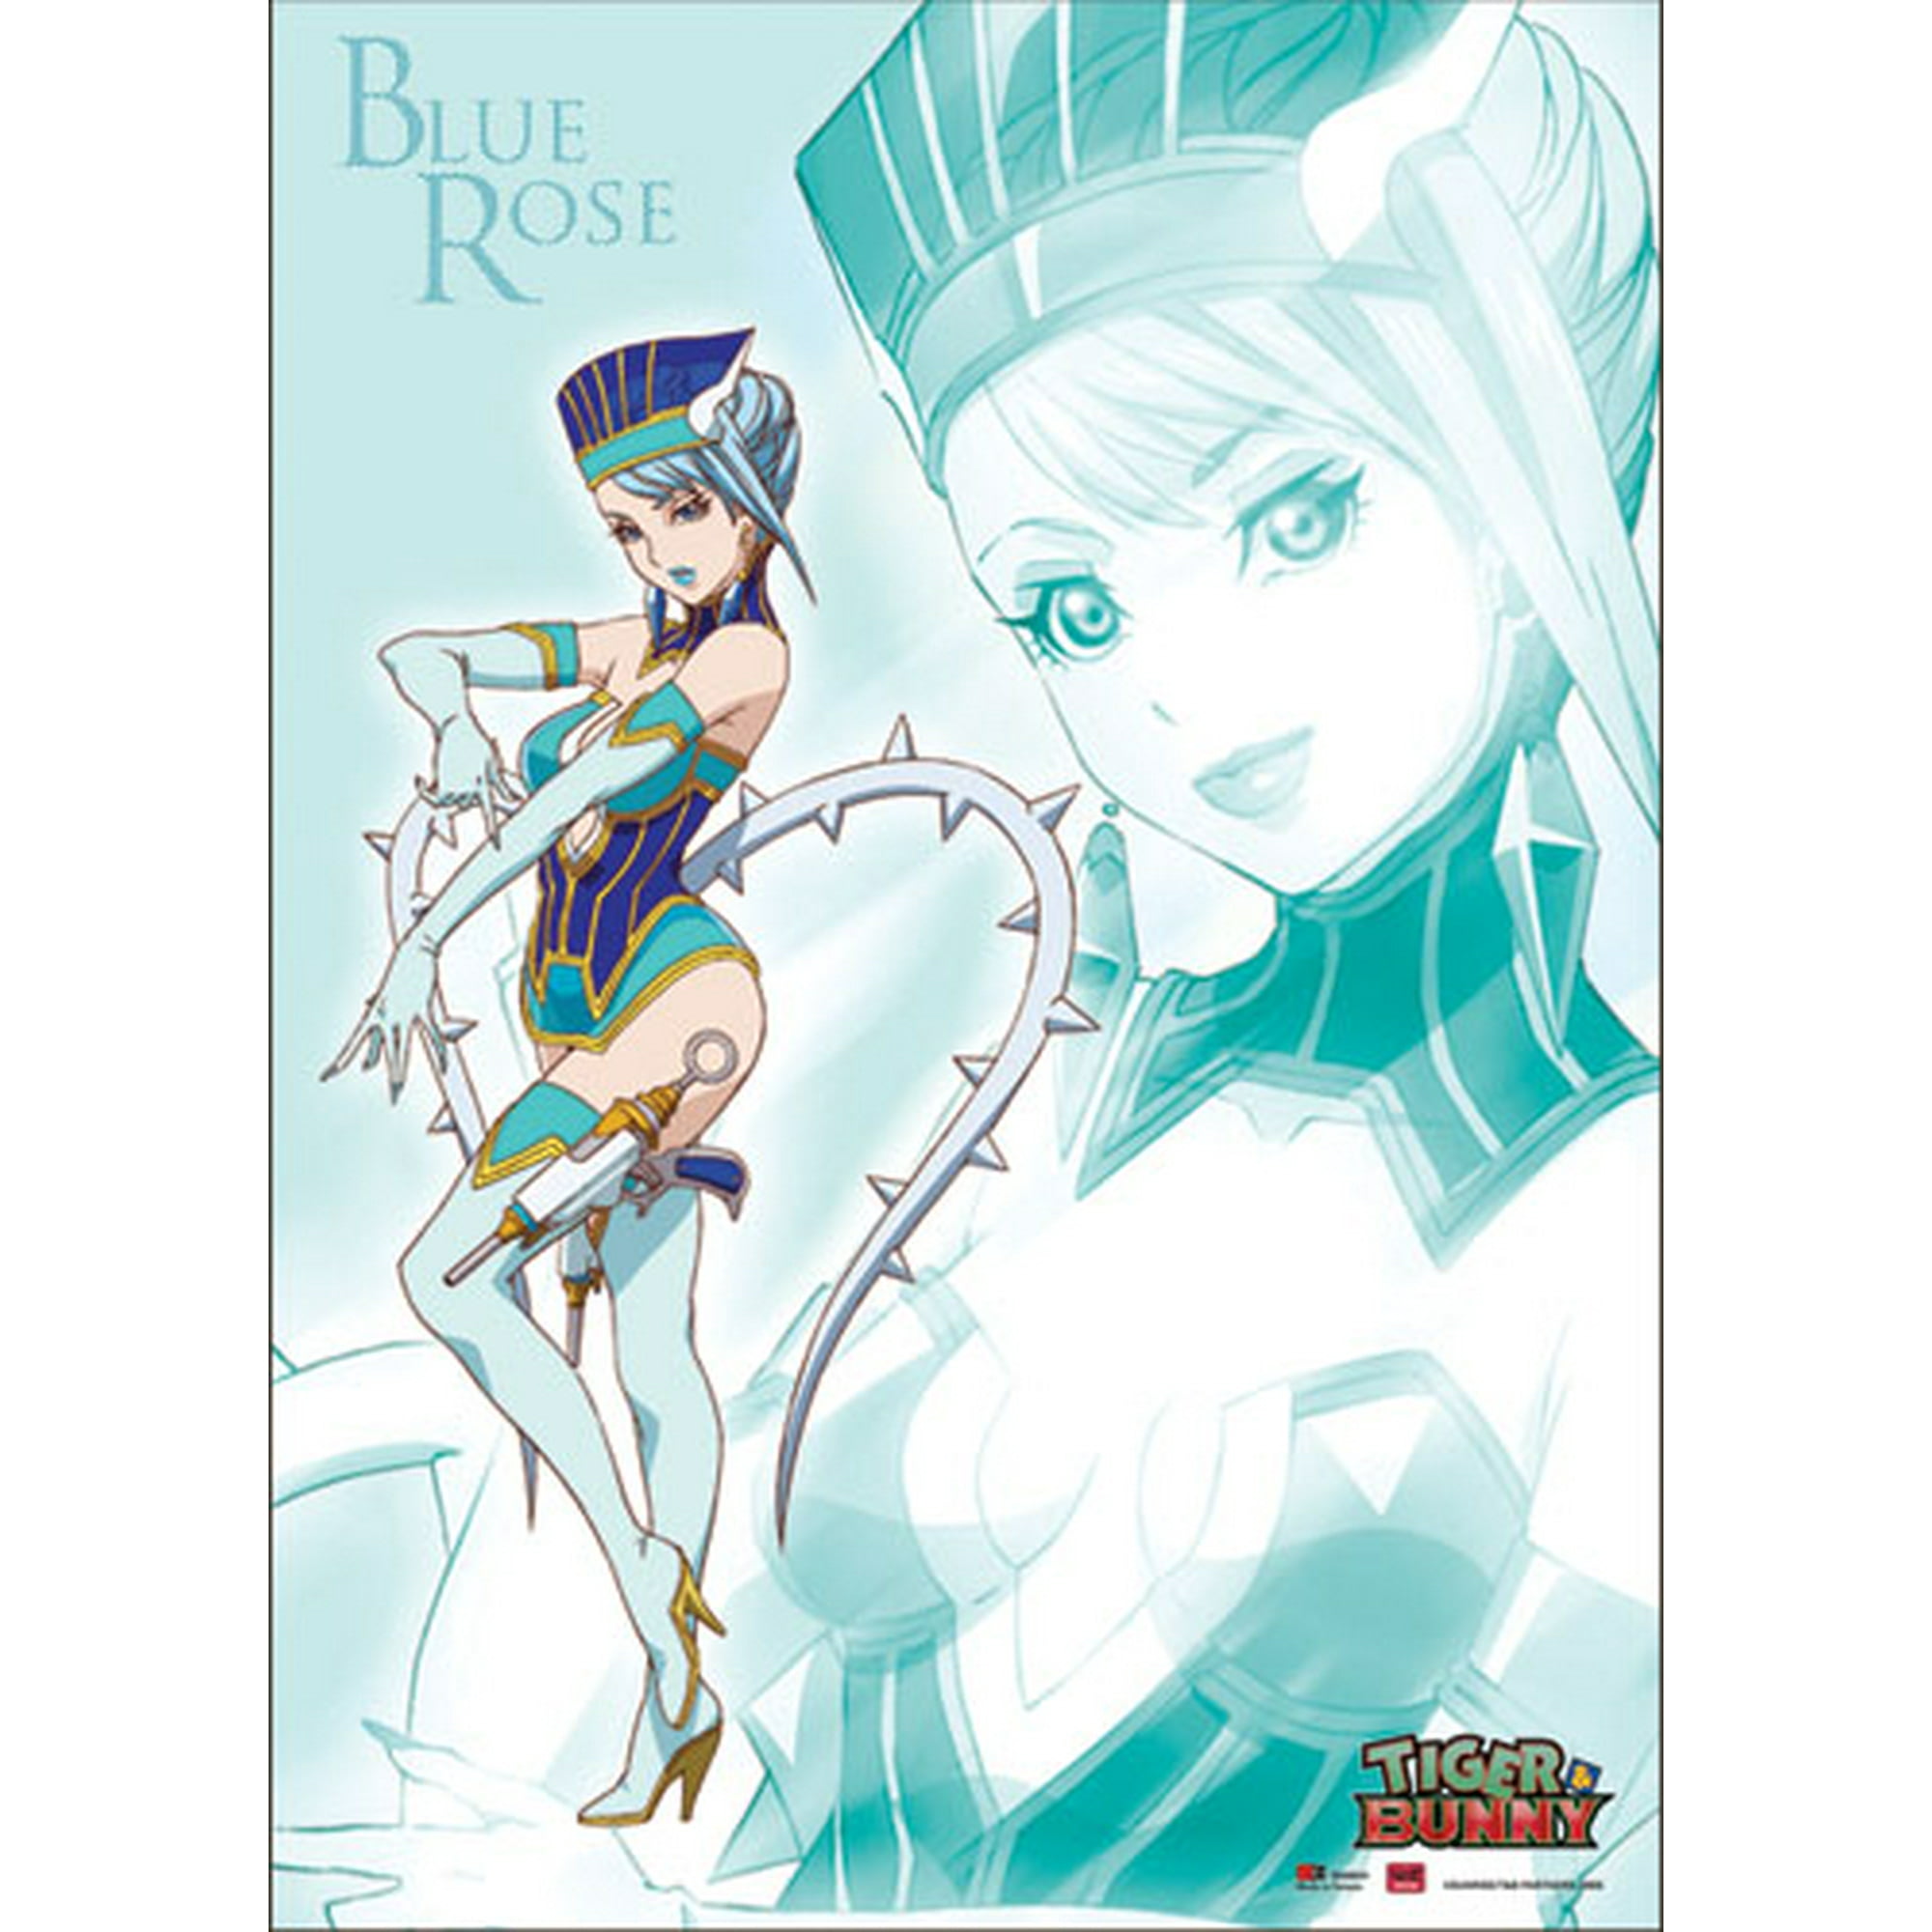 Wall Scroll - Tiger & Bunny - New Blue Rose Fabric Poster Anime Art ge60034  | Walmart Canada